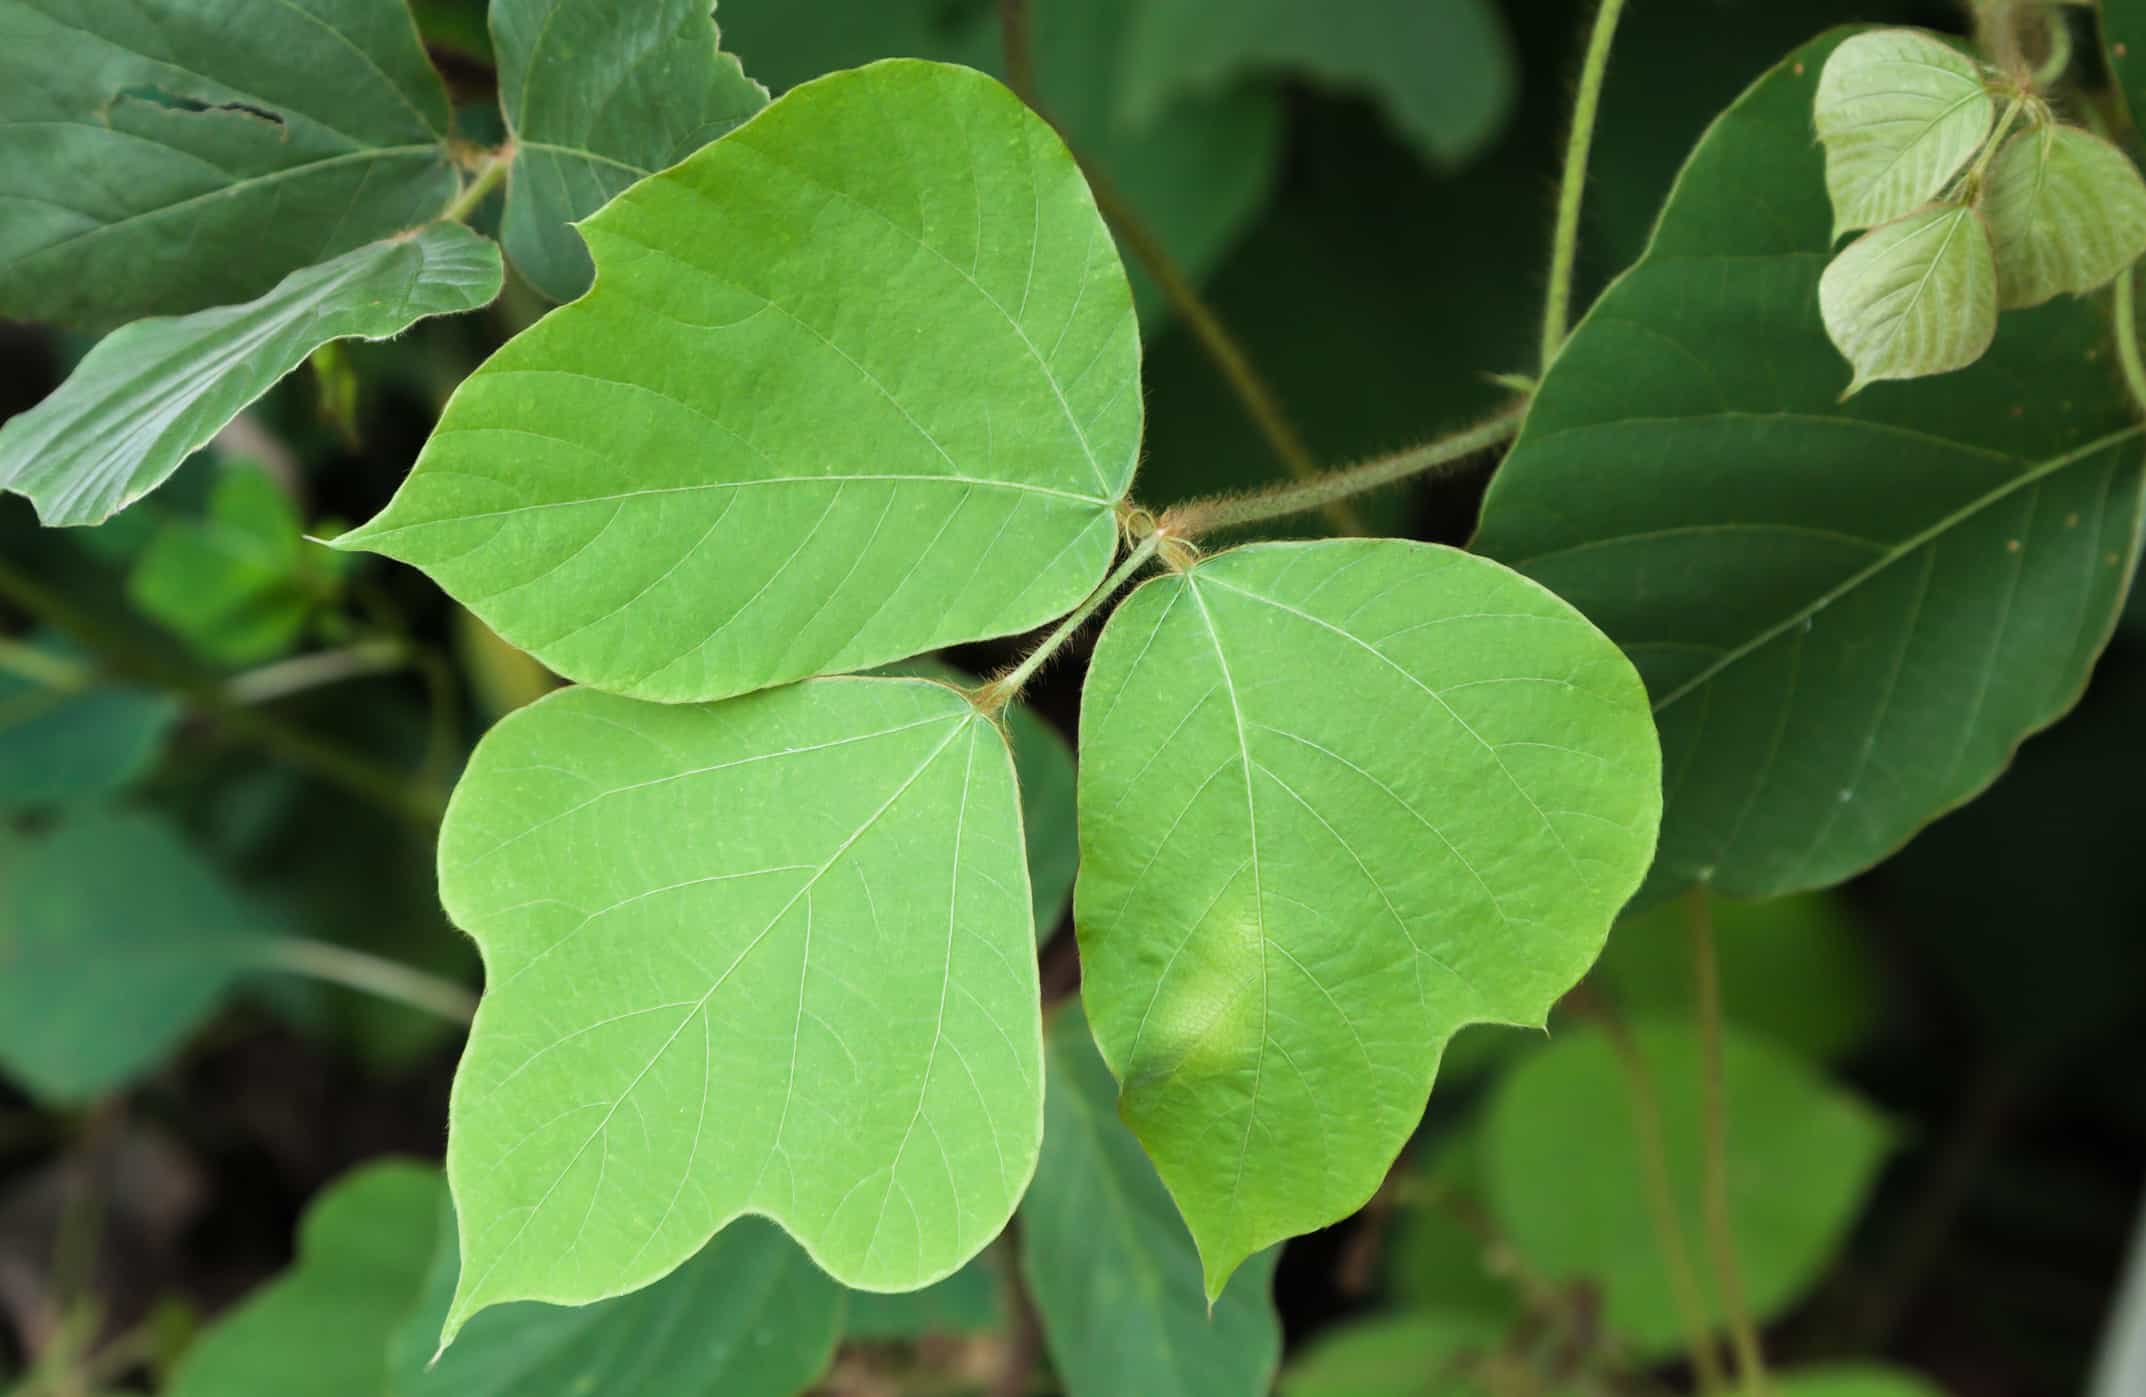 Kudzu vs. Poison Ivy: Are They the Same Plant? - A-Z Animals